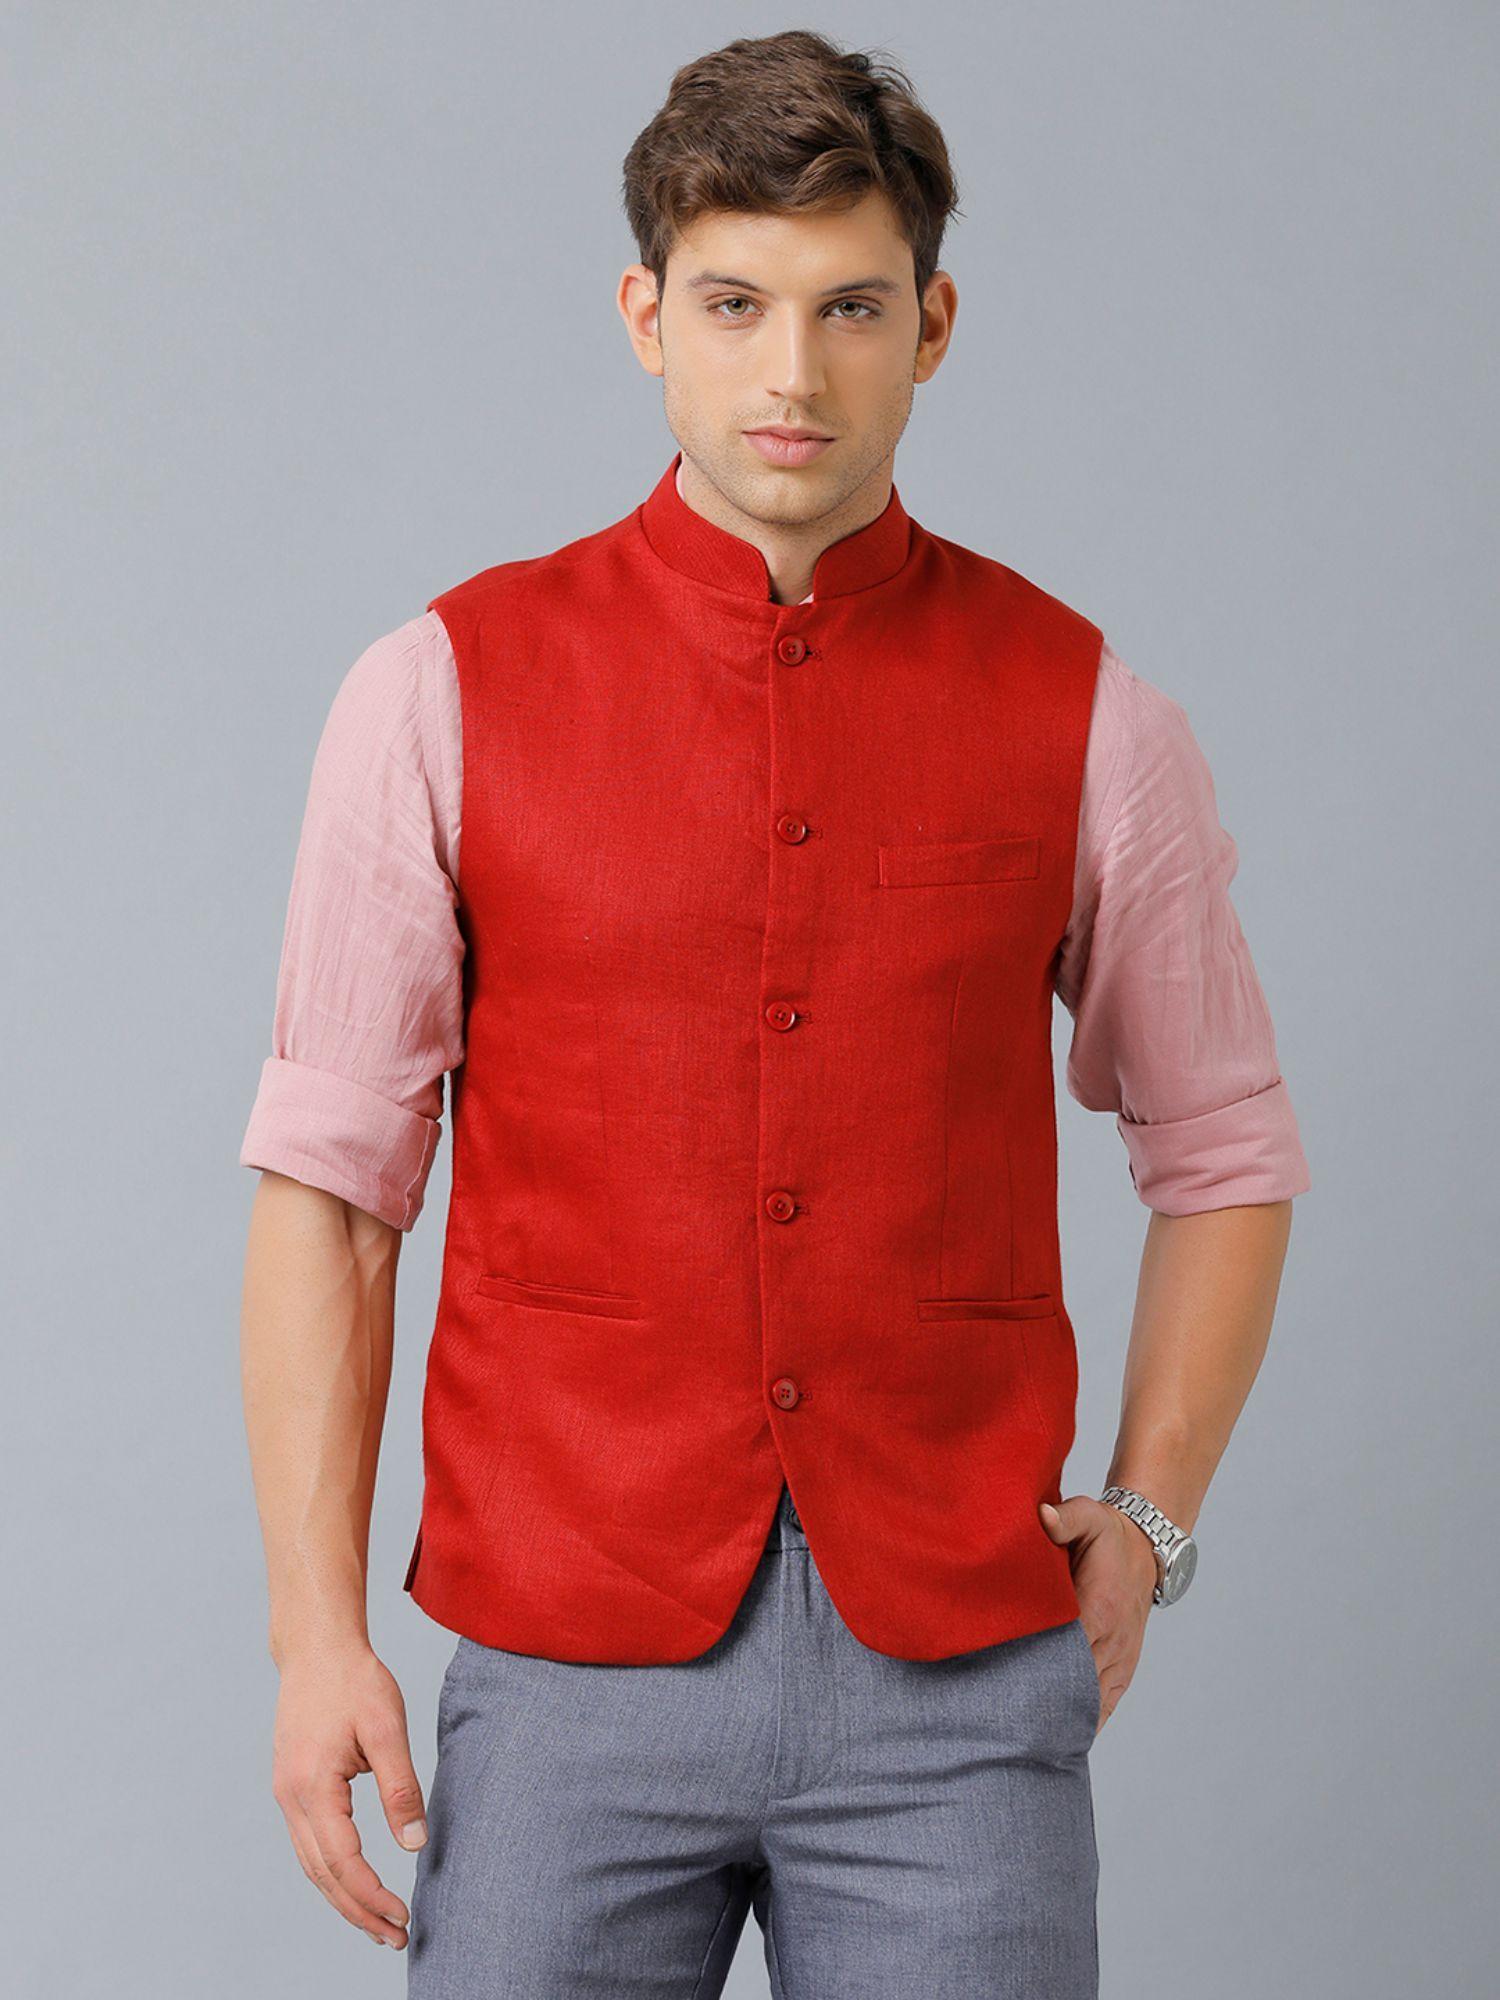 men's-pure-linen-red-solid-nehru-jacket